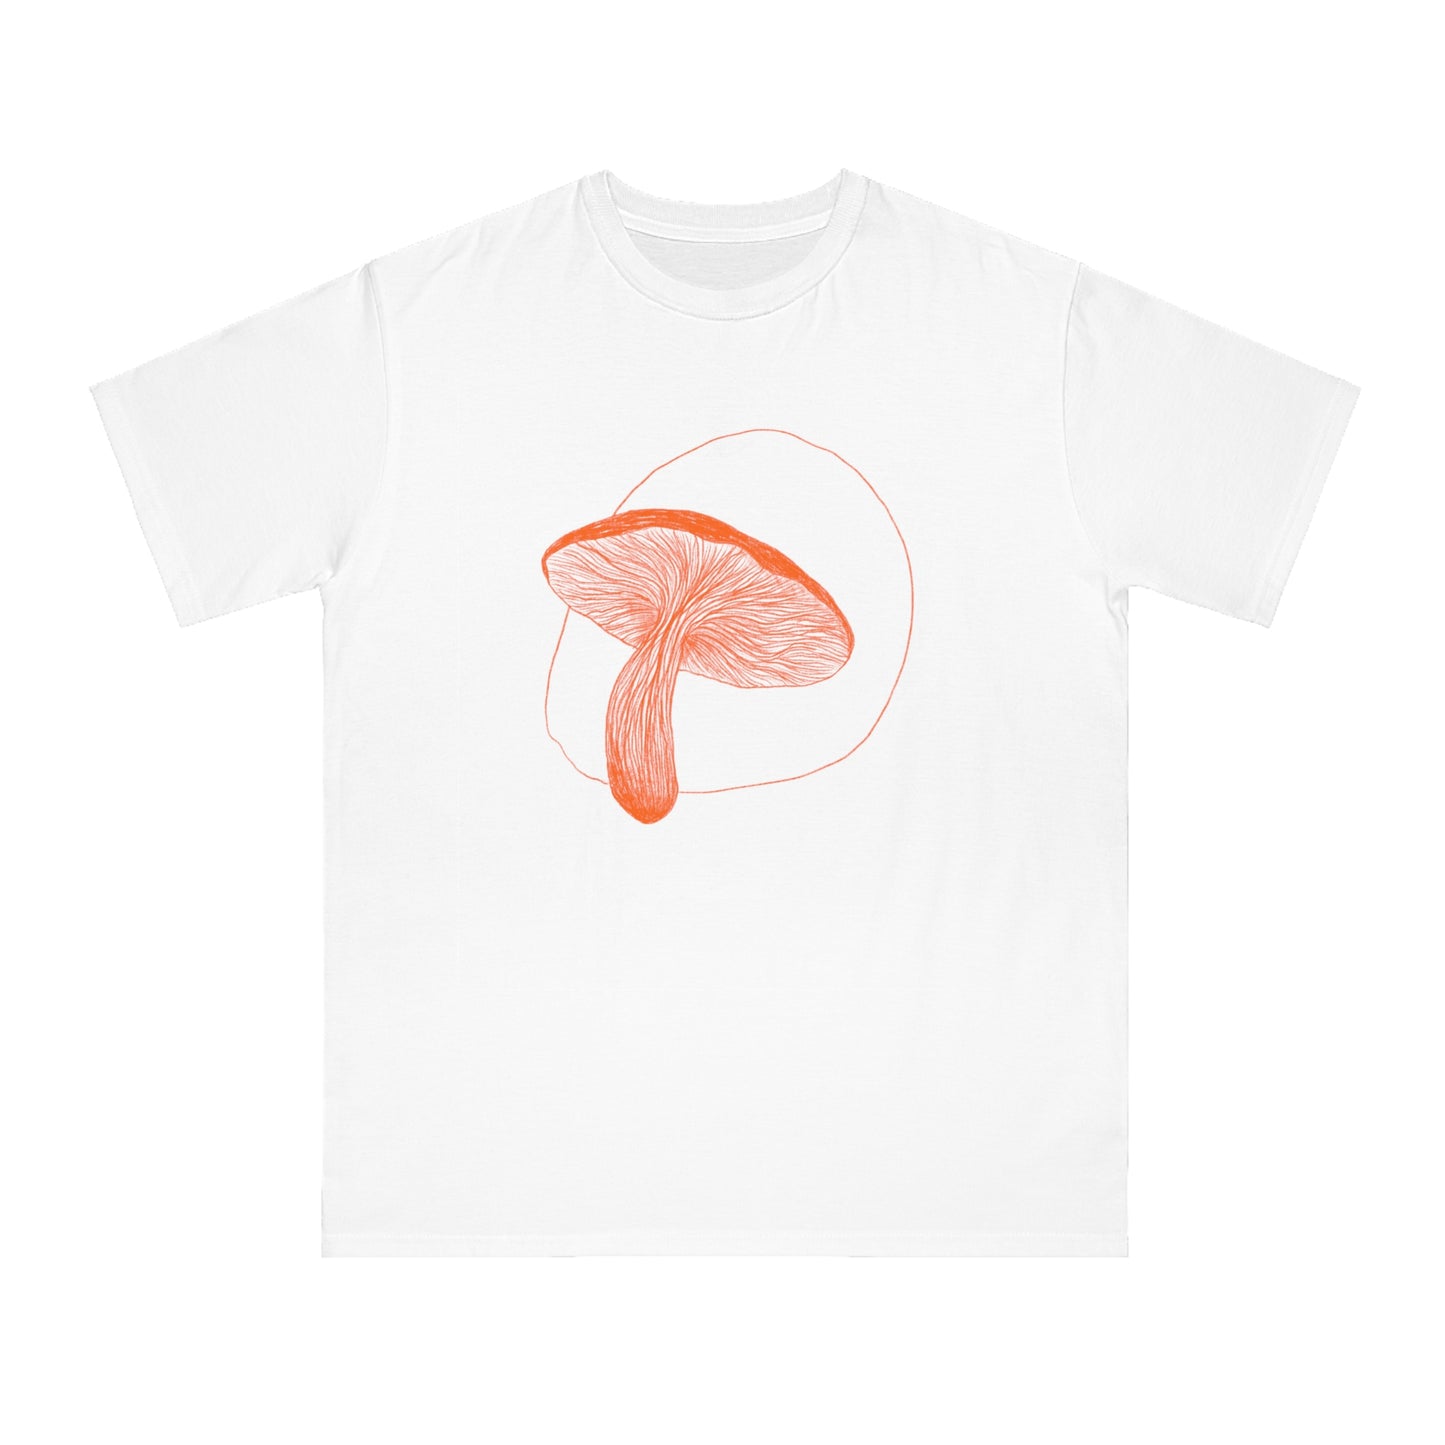 Copy of Copy of Mushroom Organic Unisex Classic T-Shirt